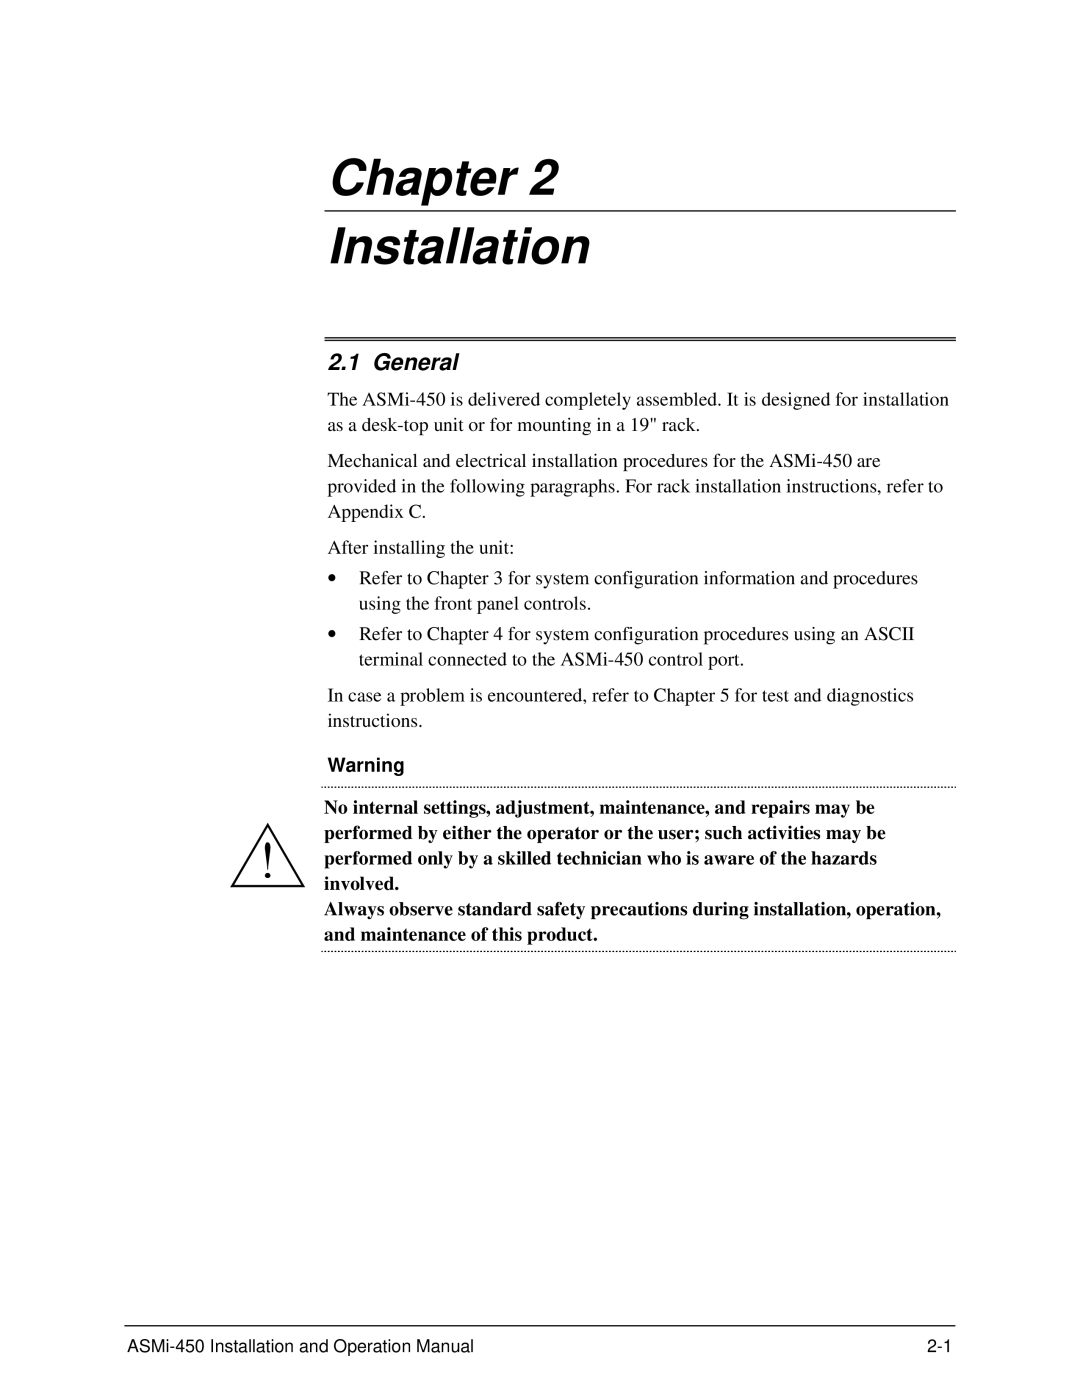 RAD Data comm ASMI-450 operation manual Chapter Installation, General 